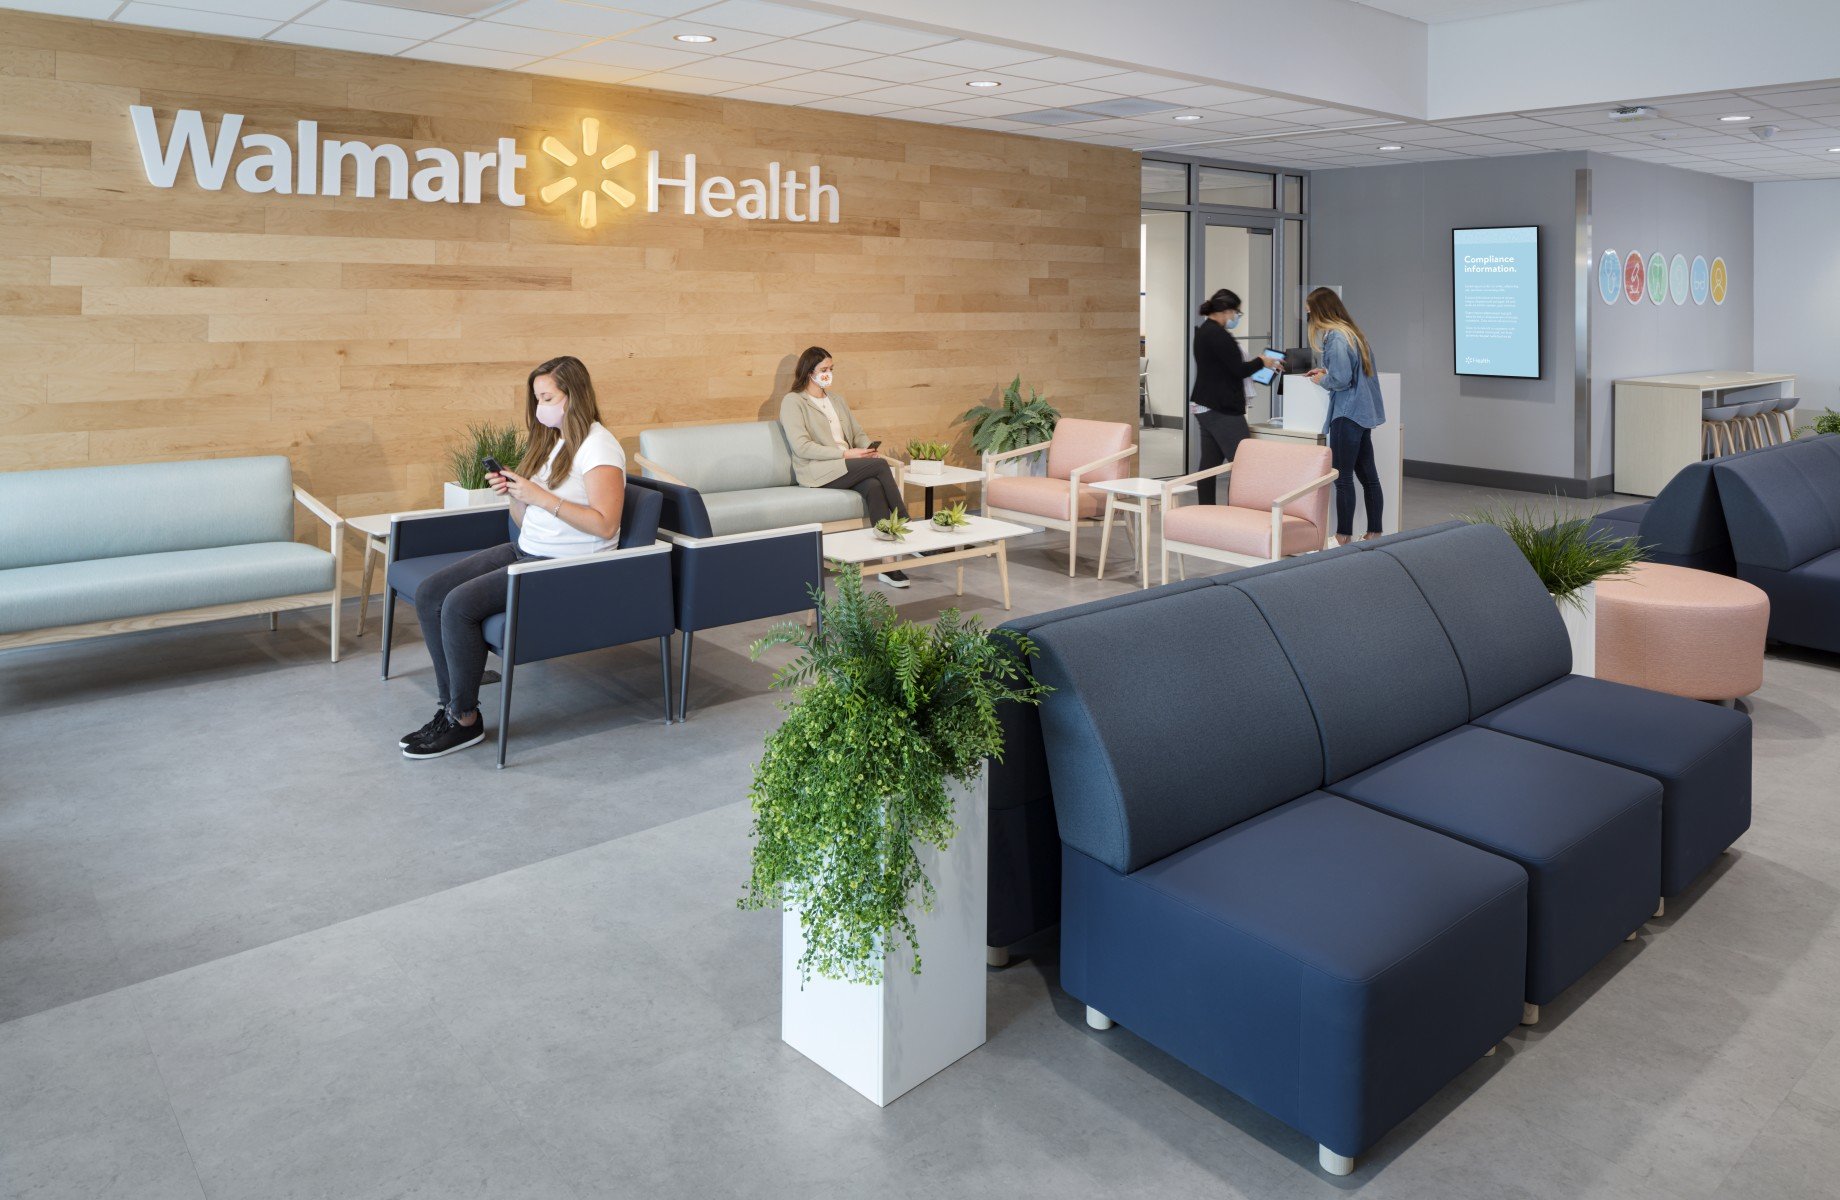 A waiting room for a Walmart Health clinic